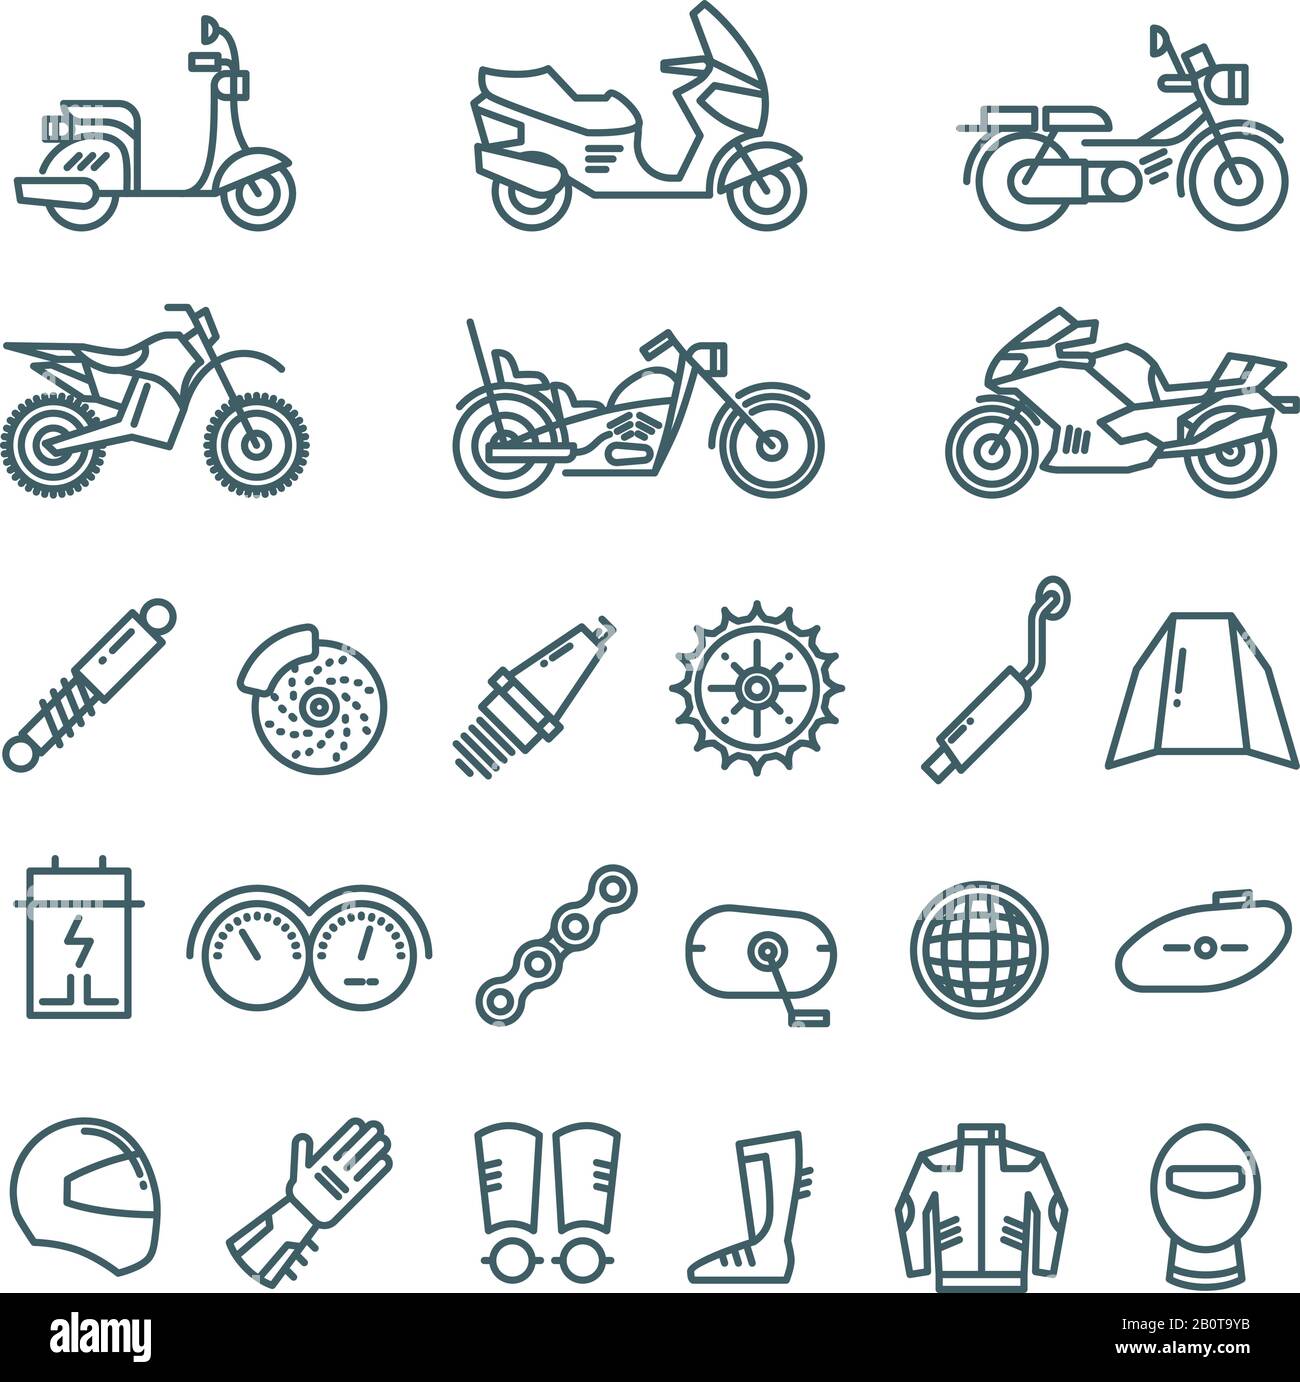 Motorcycle parts Stock-Vektorgrafiken kaufen - Alamy